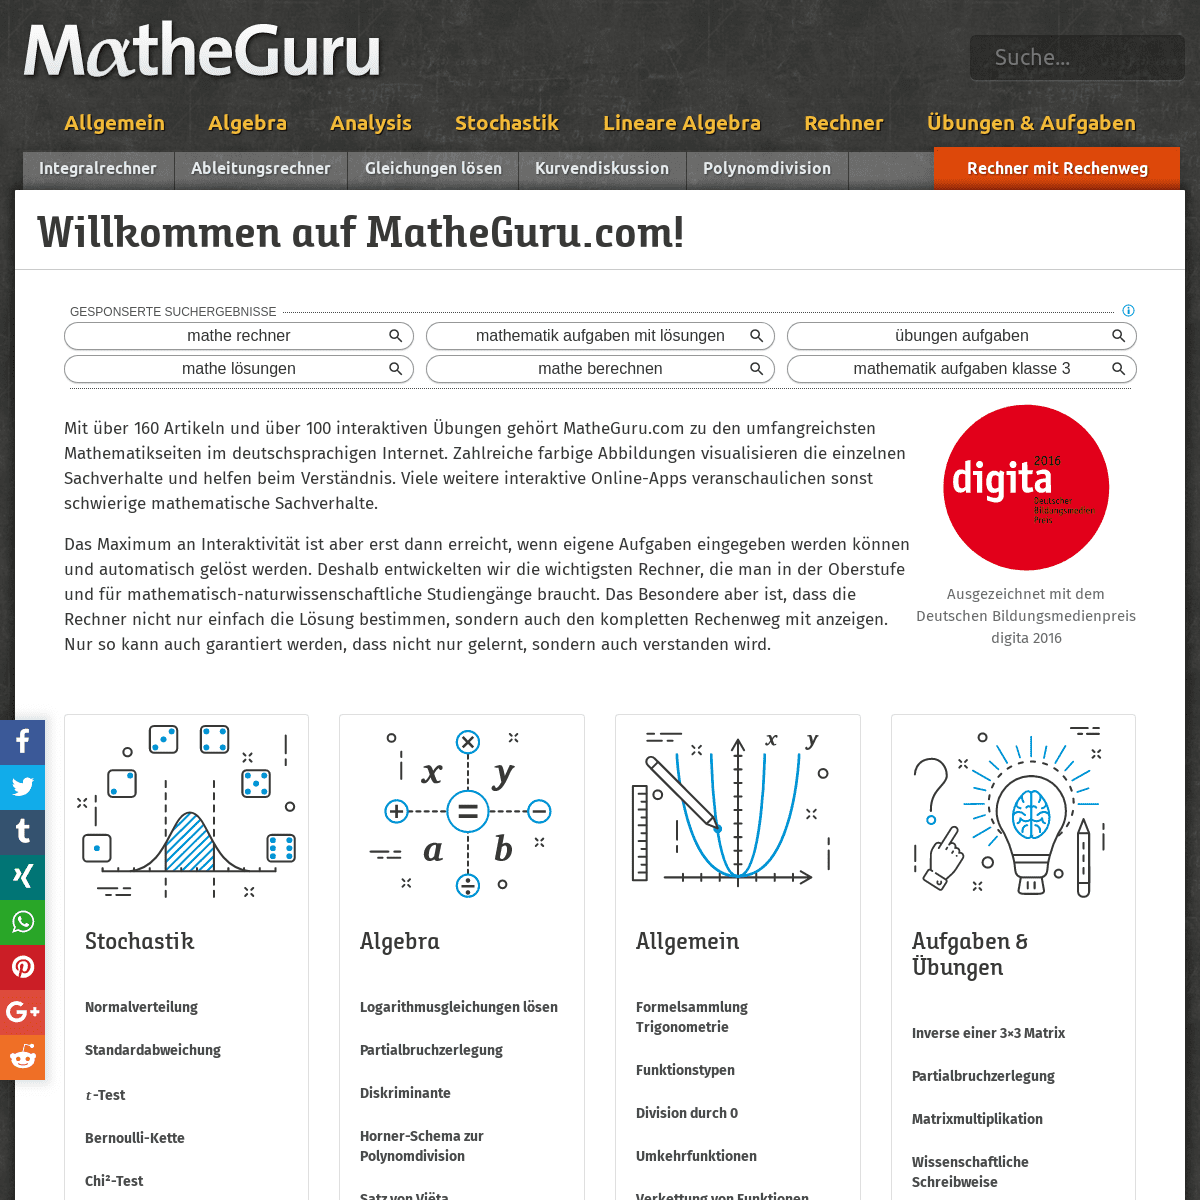 A complete backup of matheguru.com